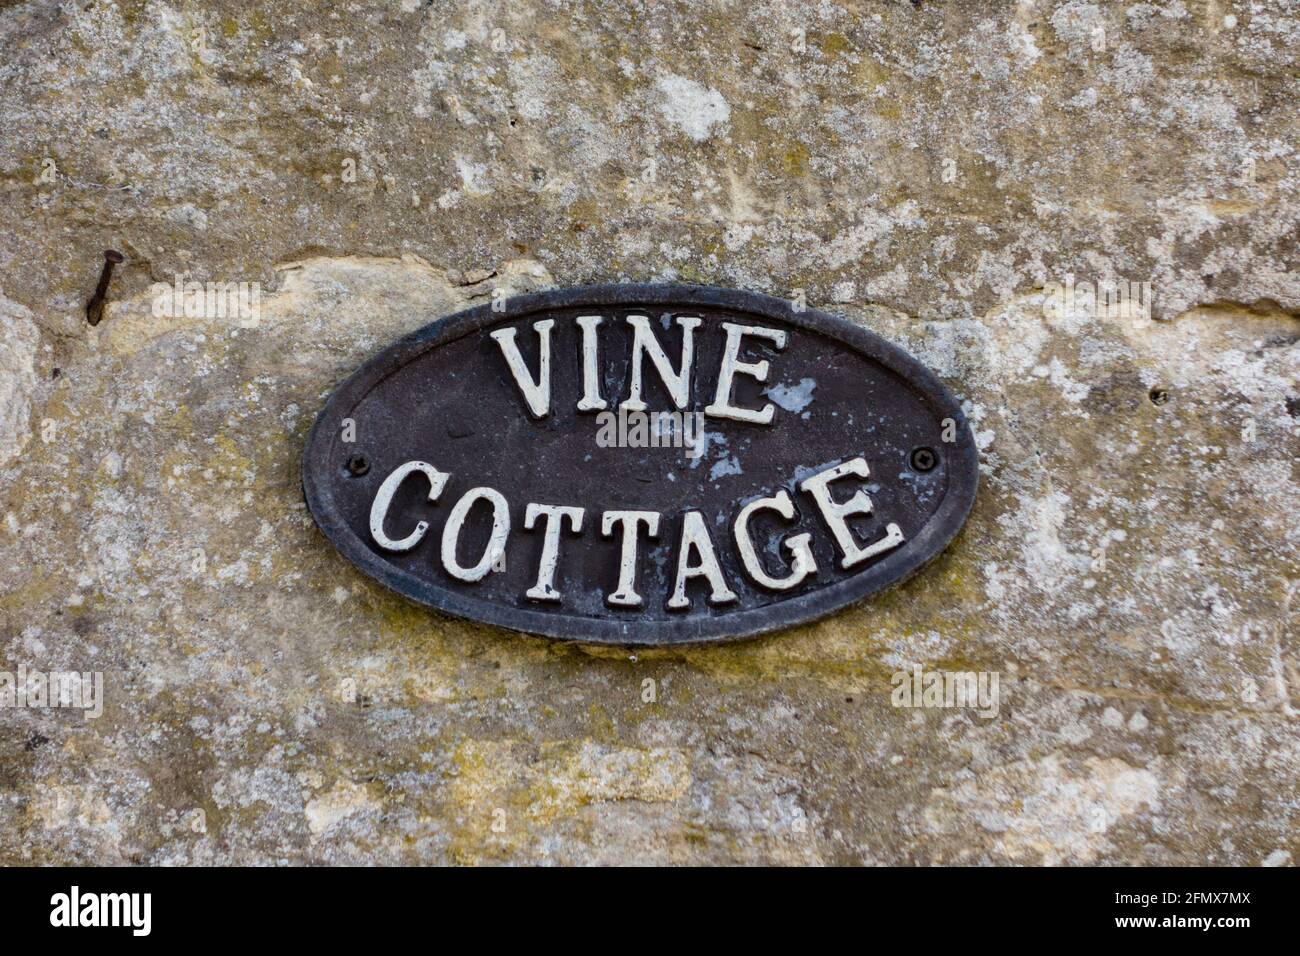 Vine cottage plaque, Gloucestershire, UK Stock Photo